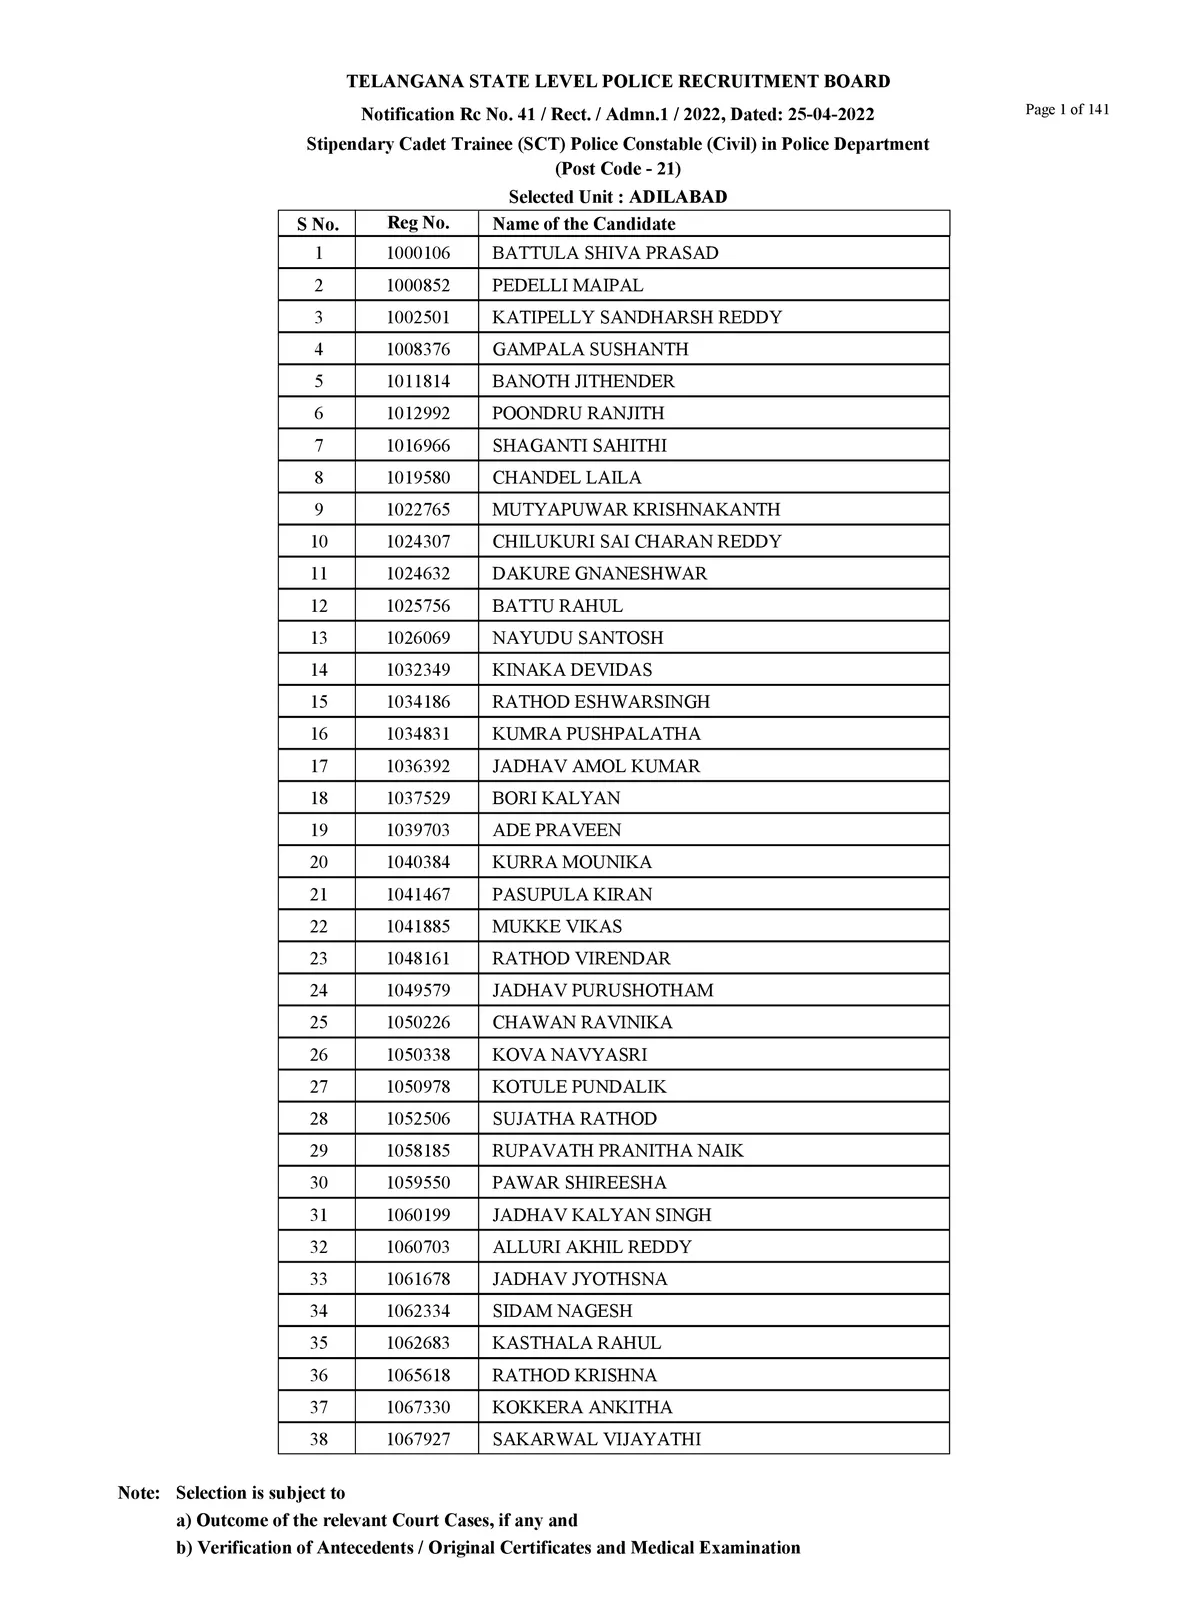 TSLPRB Results 2023 Qualified List